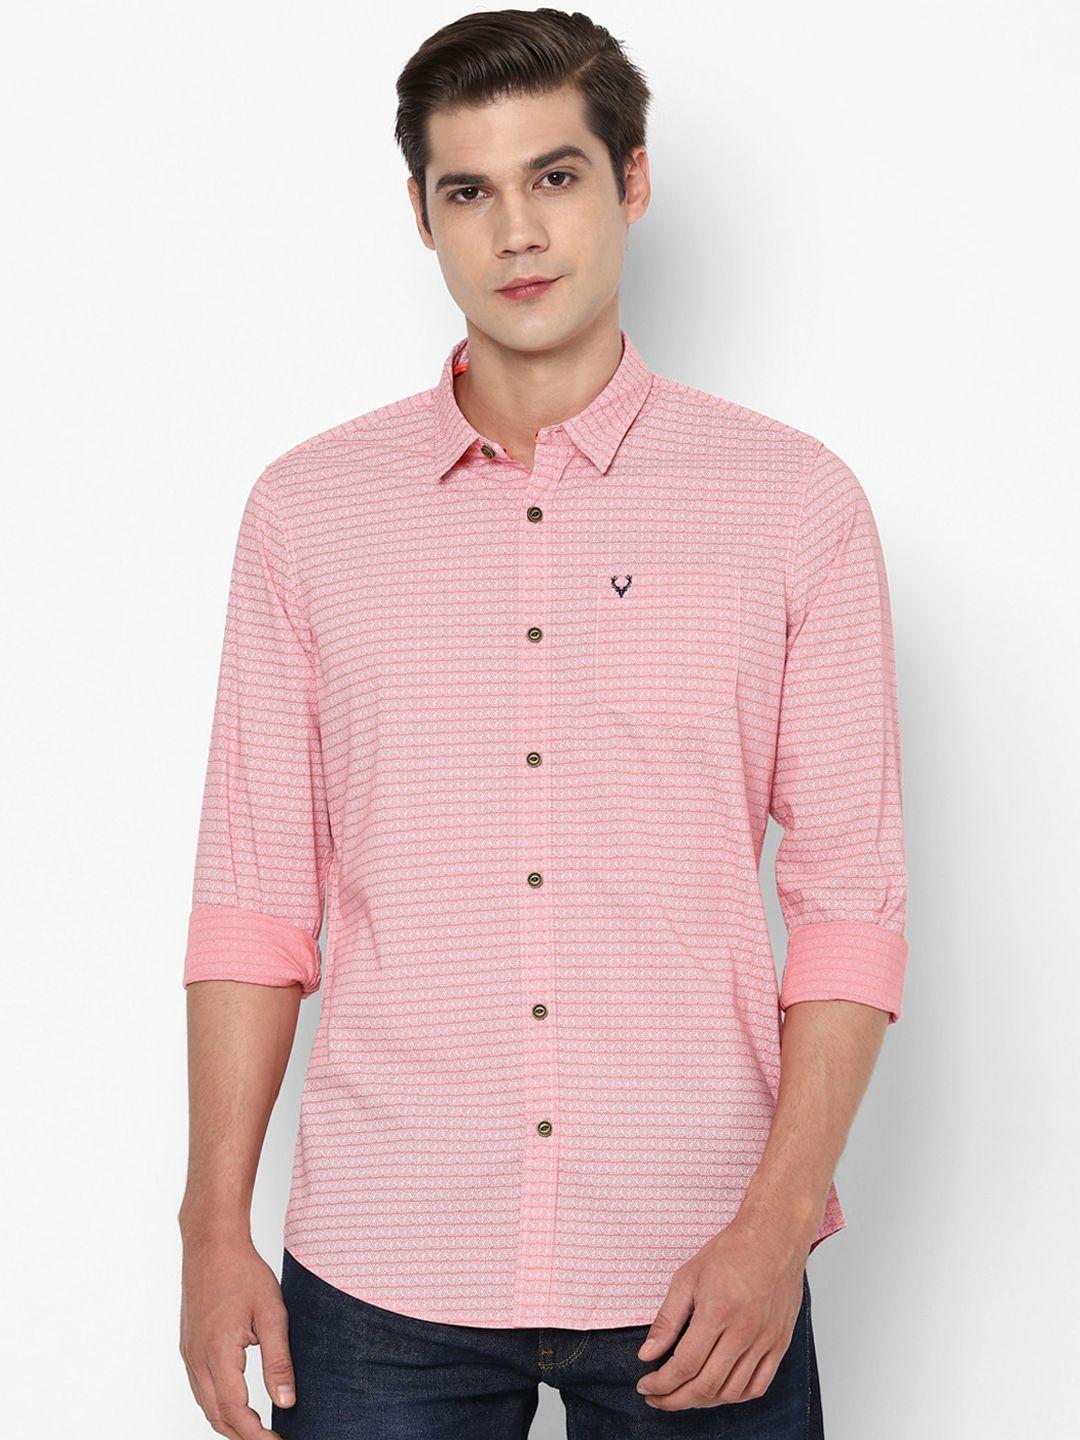 allen solly sport men pink & white regular fit printed casual shirt